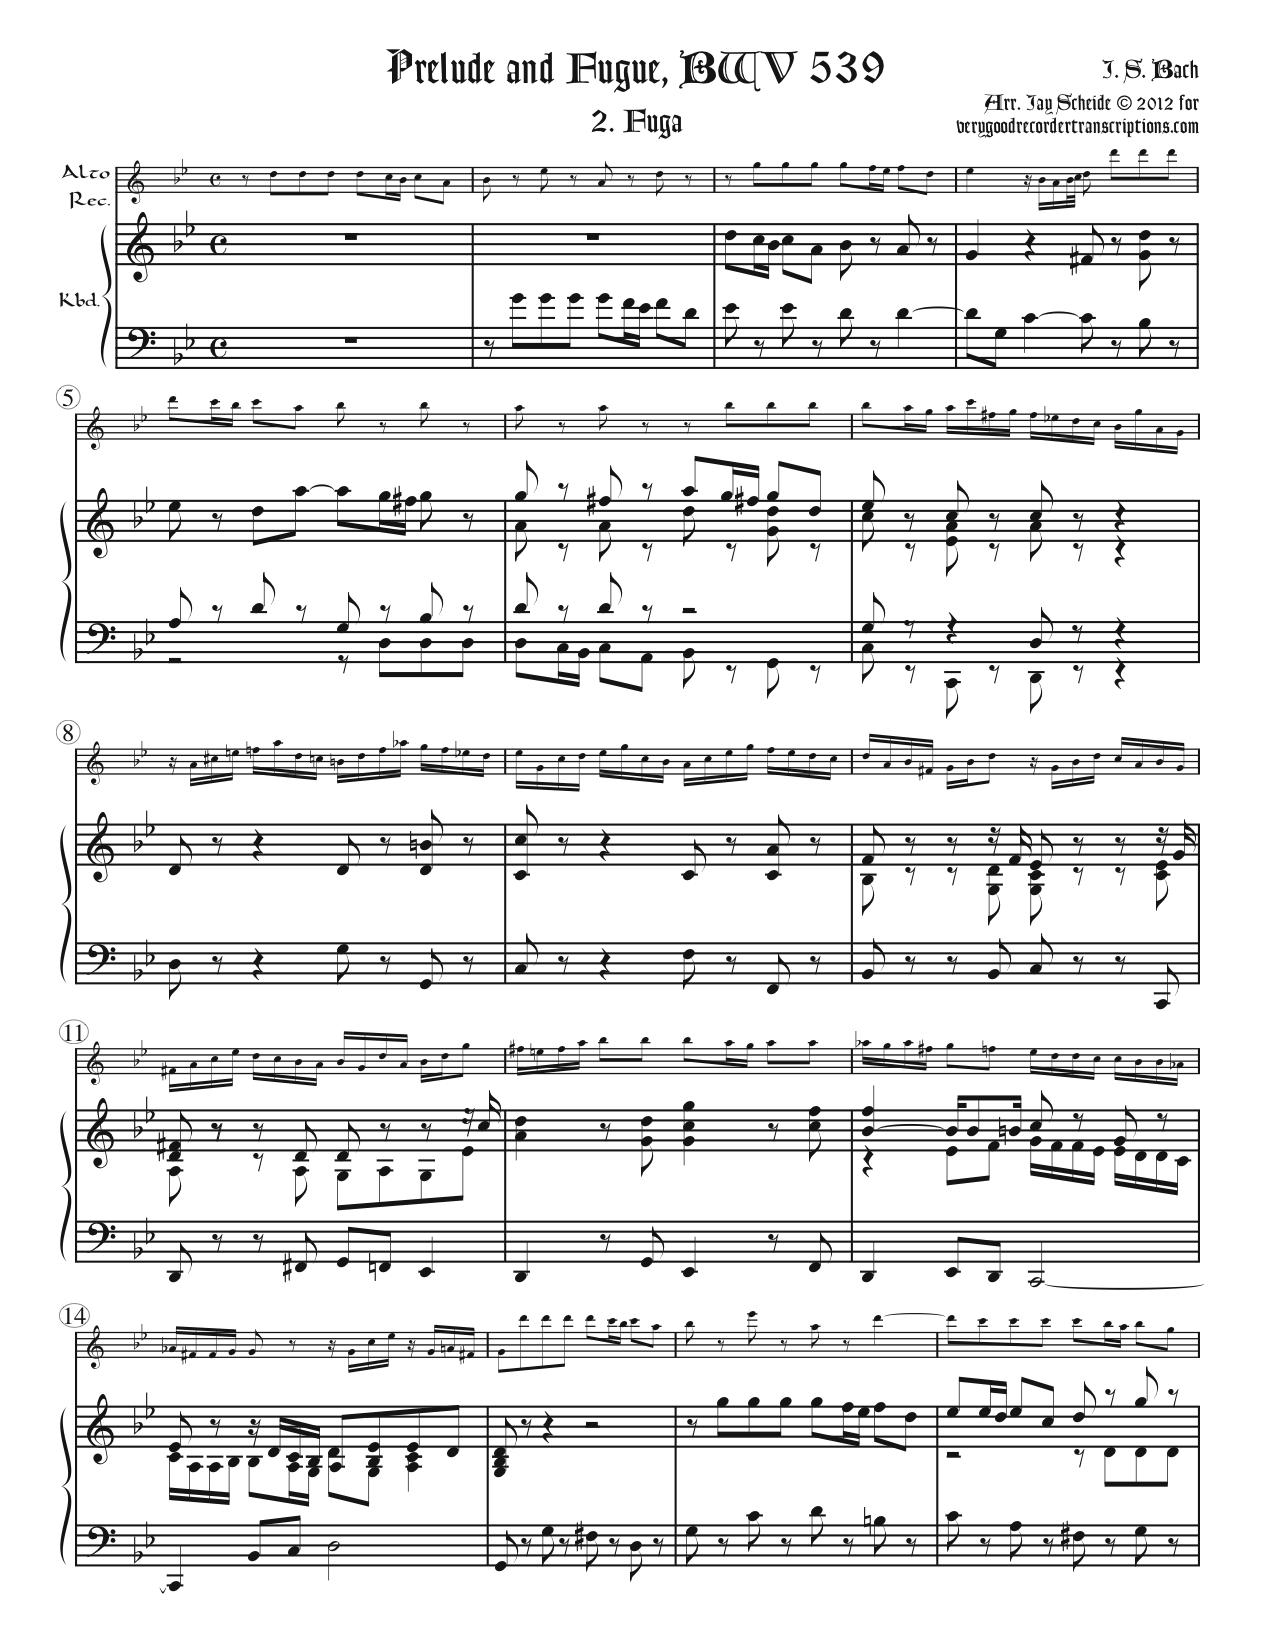 Fugue from BWV 539